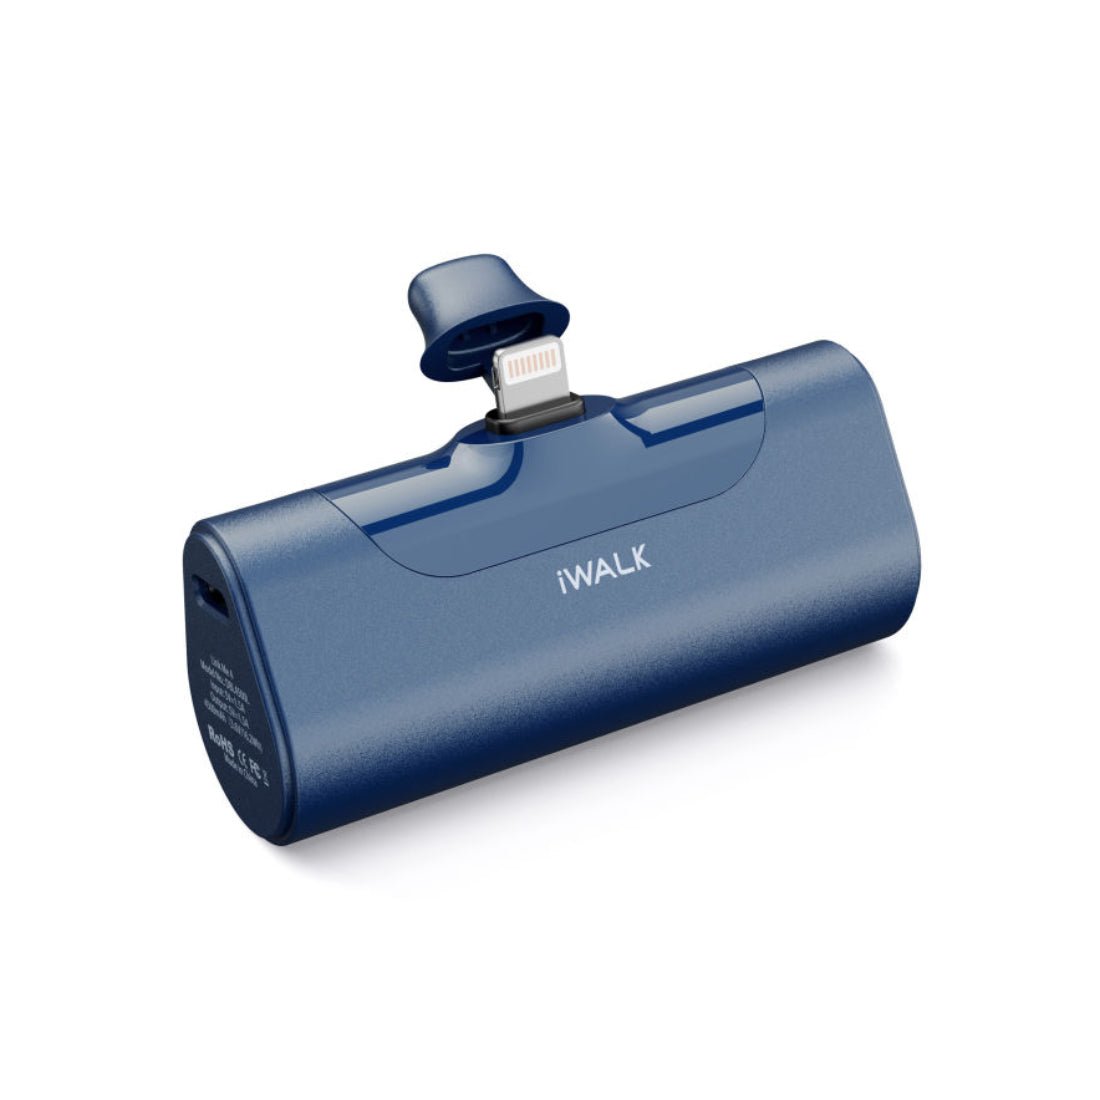 iWalk 4500mAh Portable Charger USB Lightening Battery Pack - Blue - مزود طاقة - Store 974 | ستور ٩٧٤